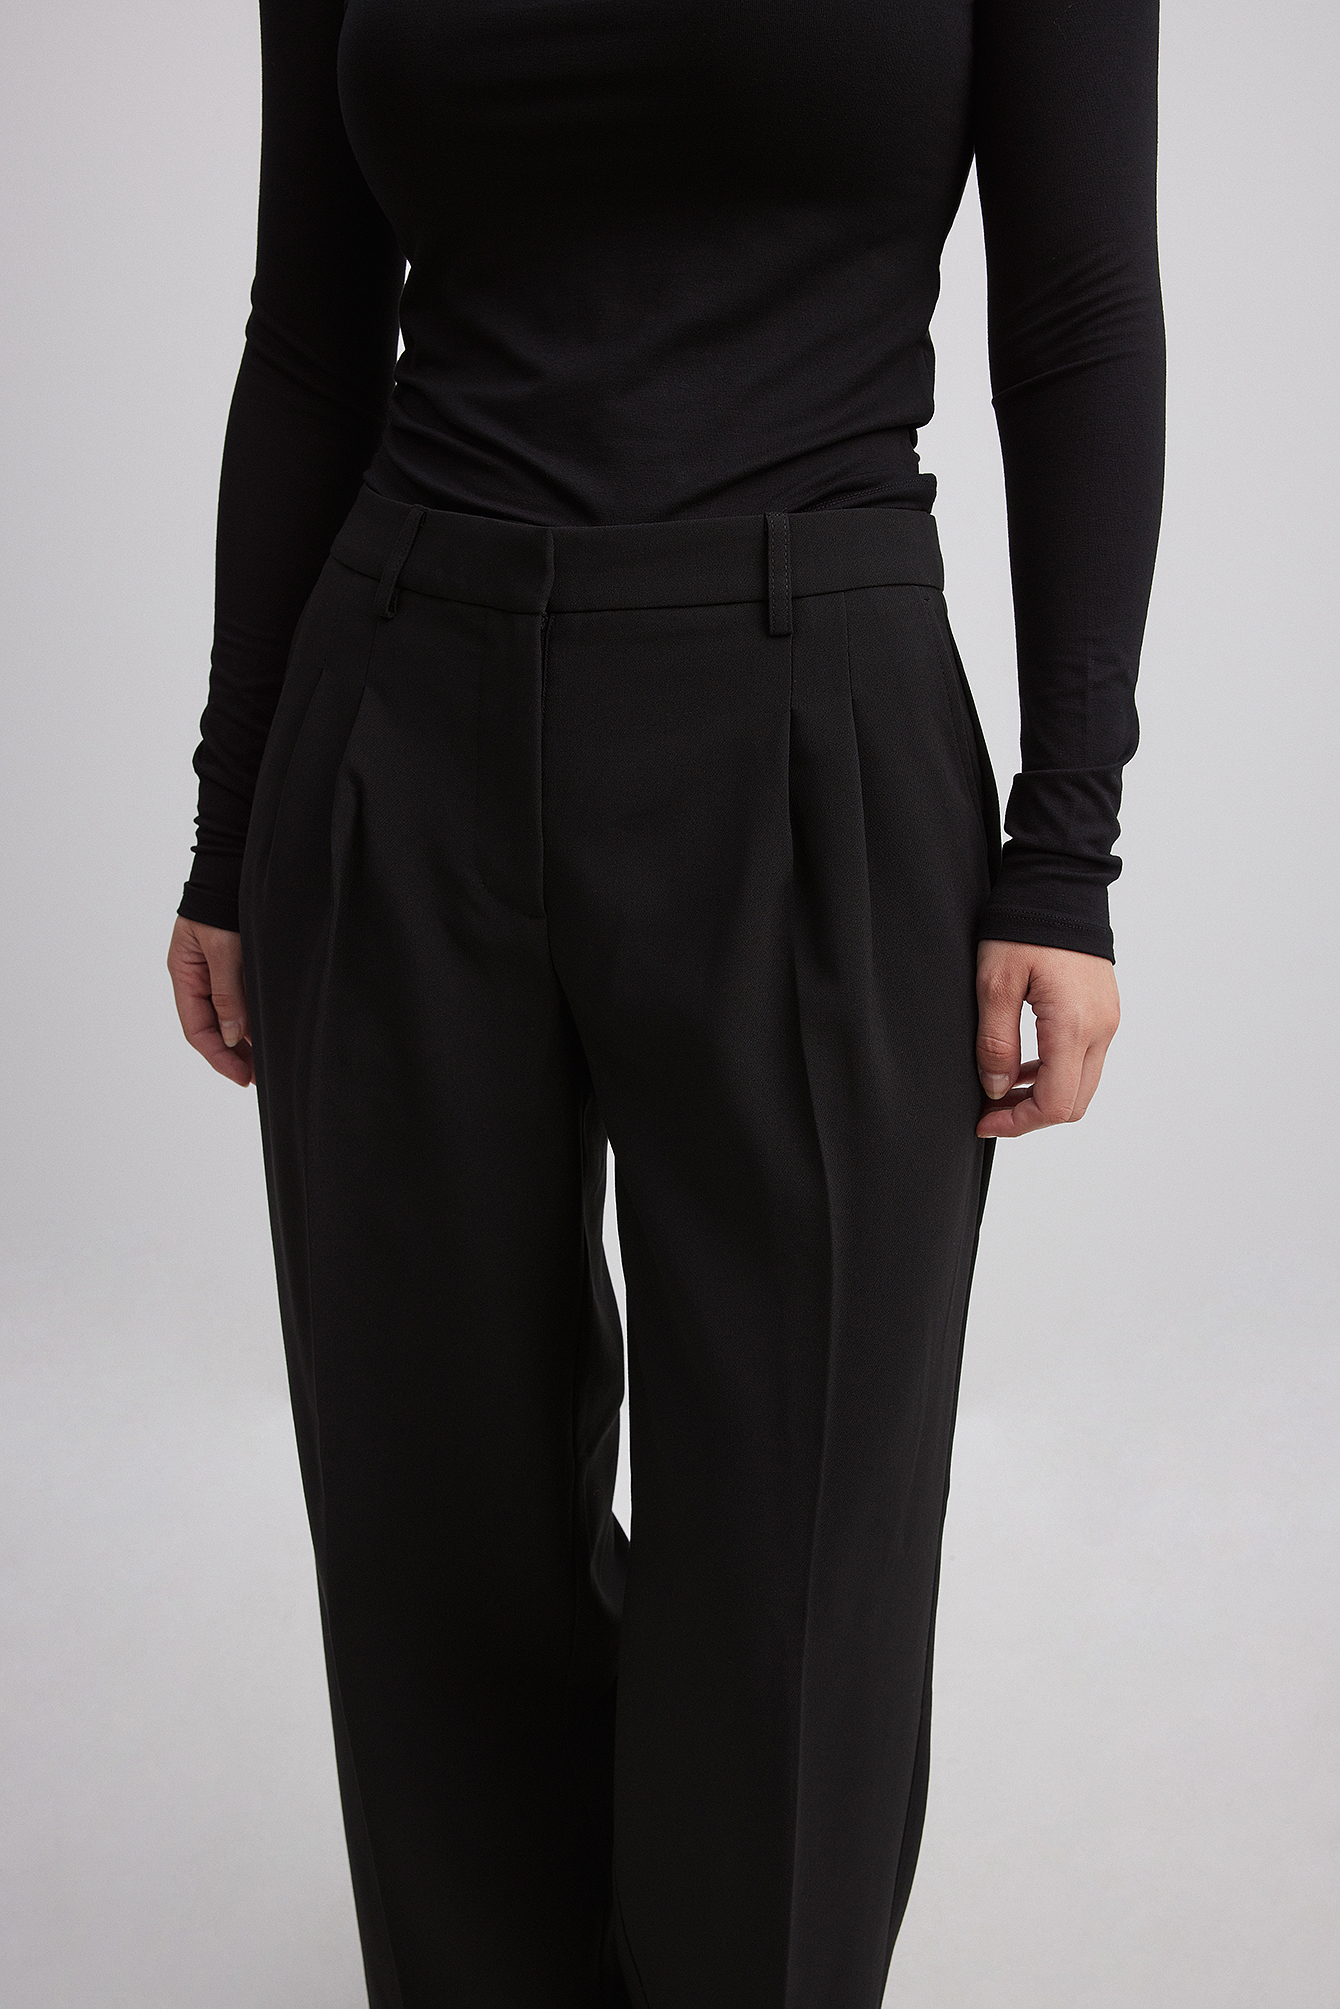 JustFab Women's Dress Pants BLACK - Black Belted Crop High-Waist Trousers -  Women - Yahoo Shopping